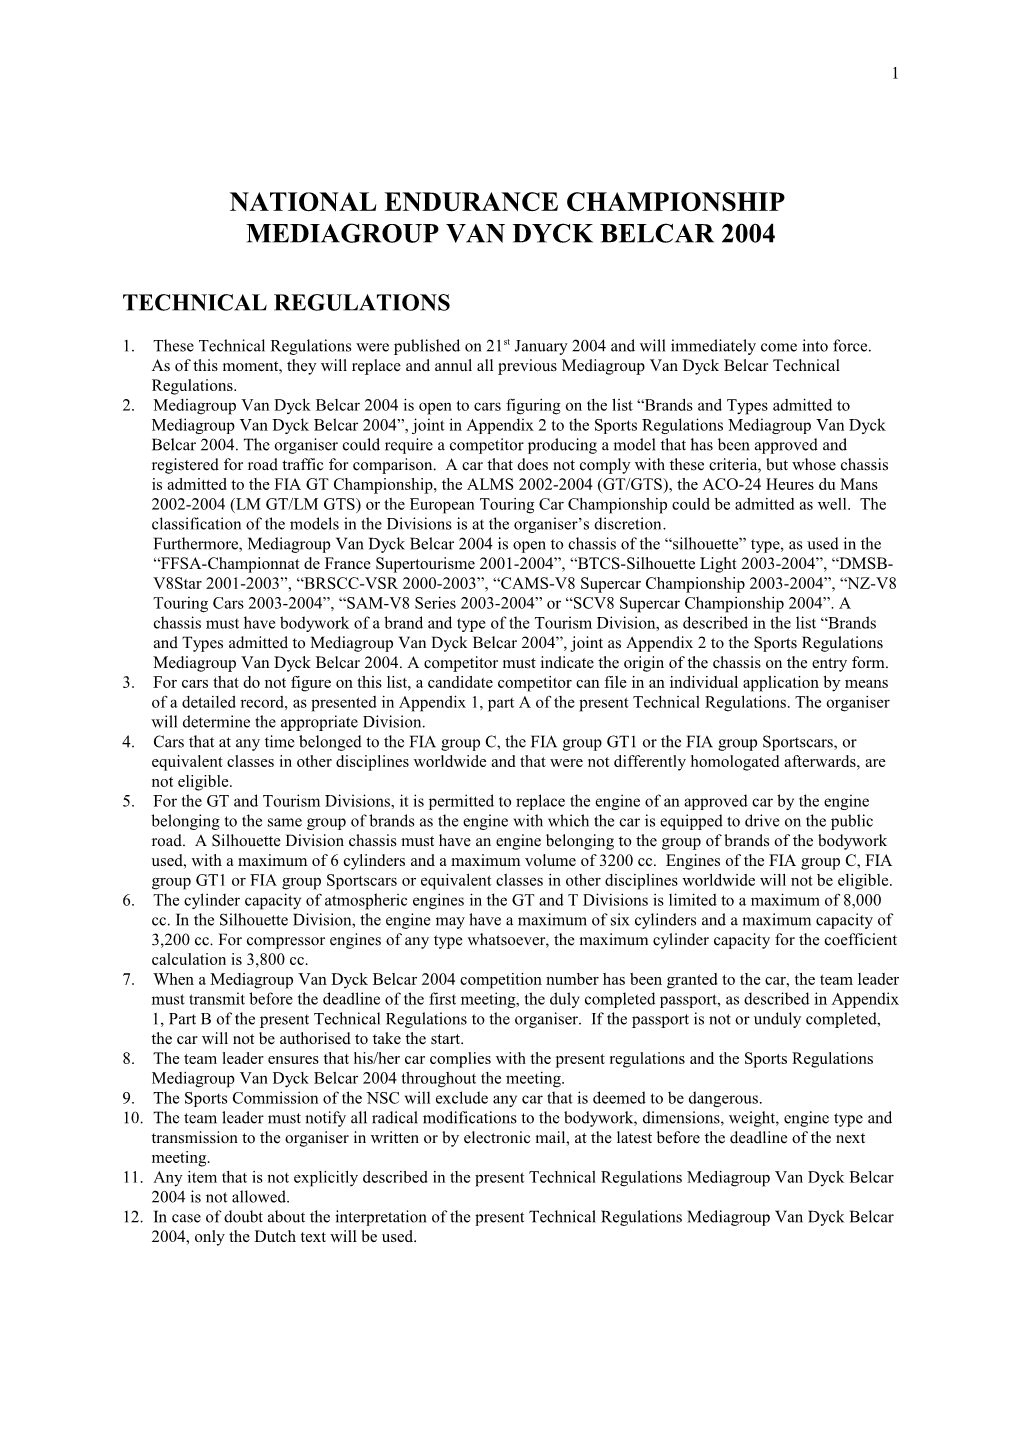 Mediagroup Van Dyck Belcar 2004